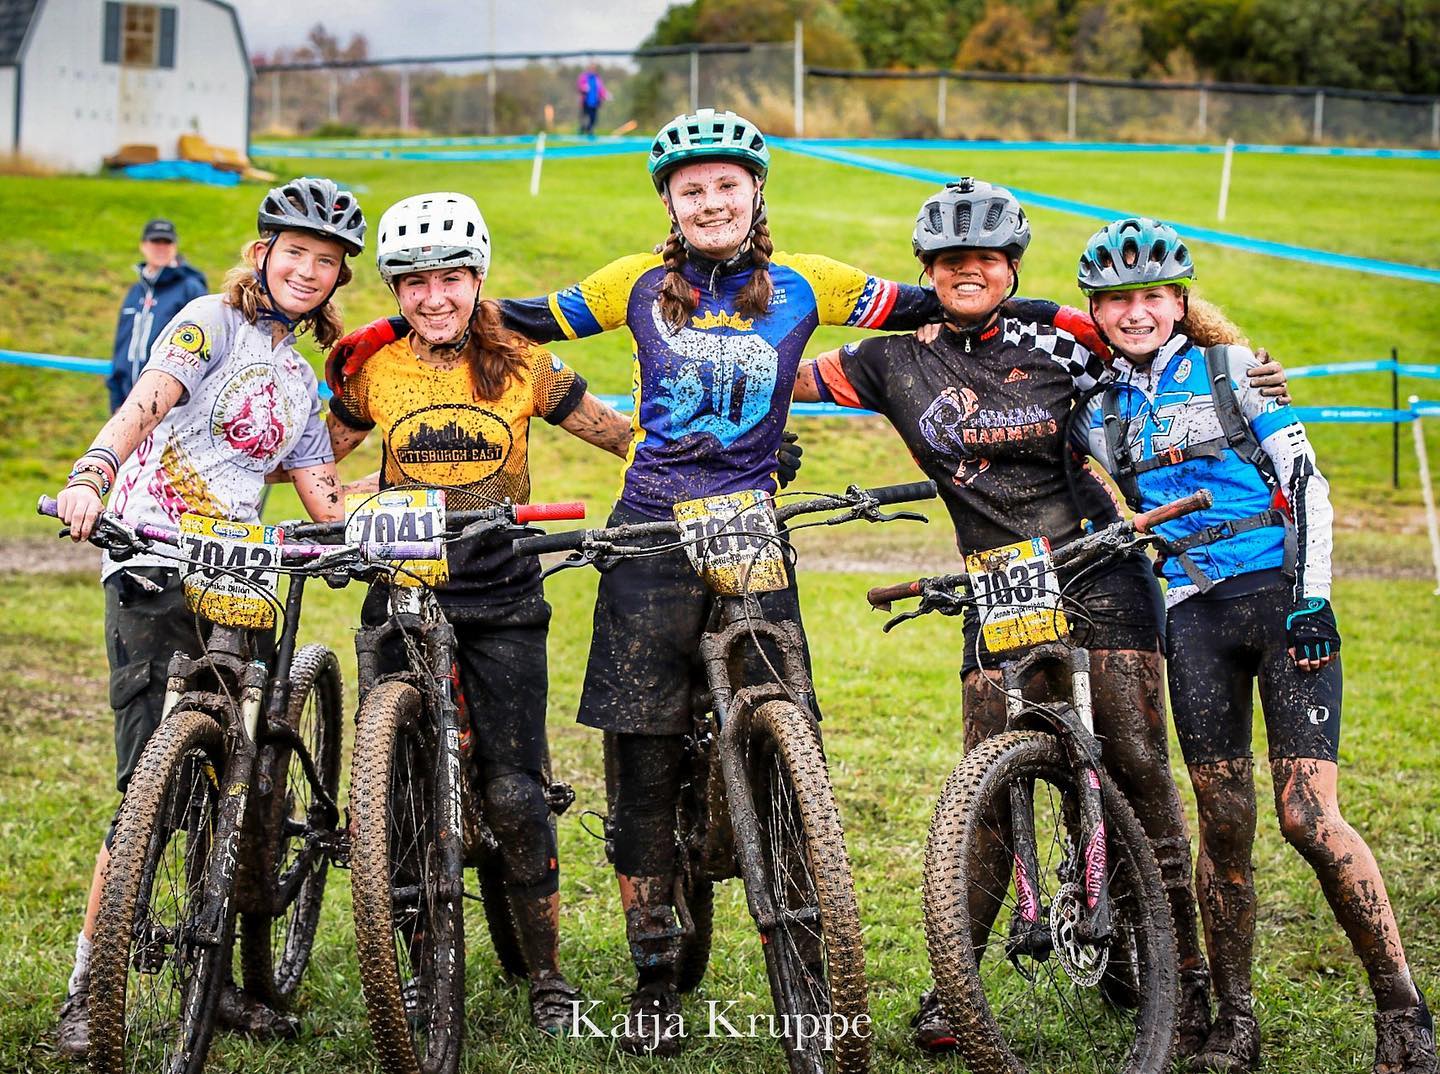 Johnstown Mud Girls group photo